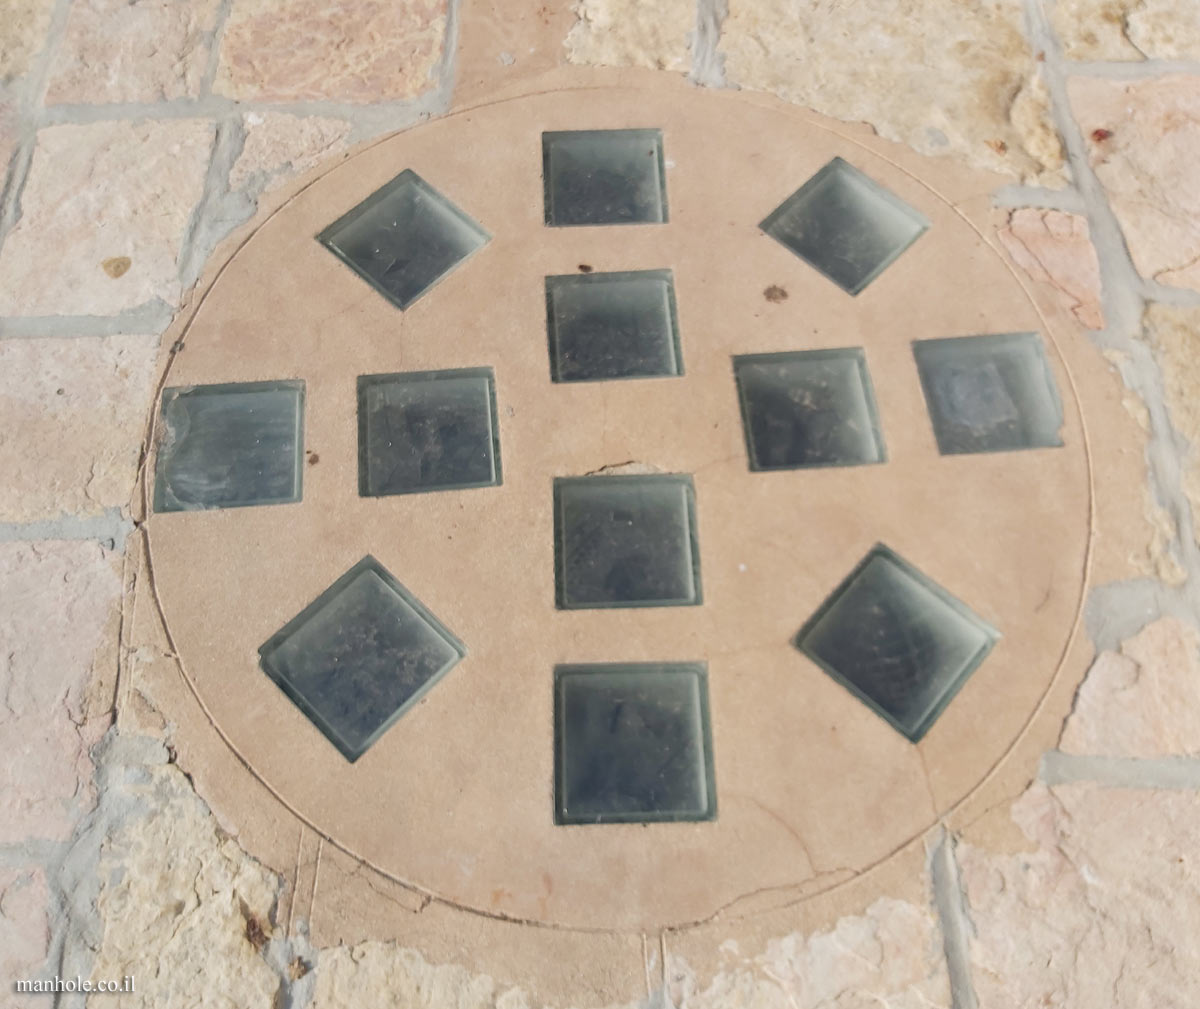 Tel Aviv - Old Jaffa - A lid with transparent squares